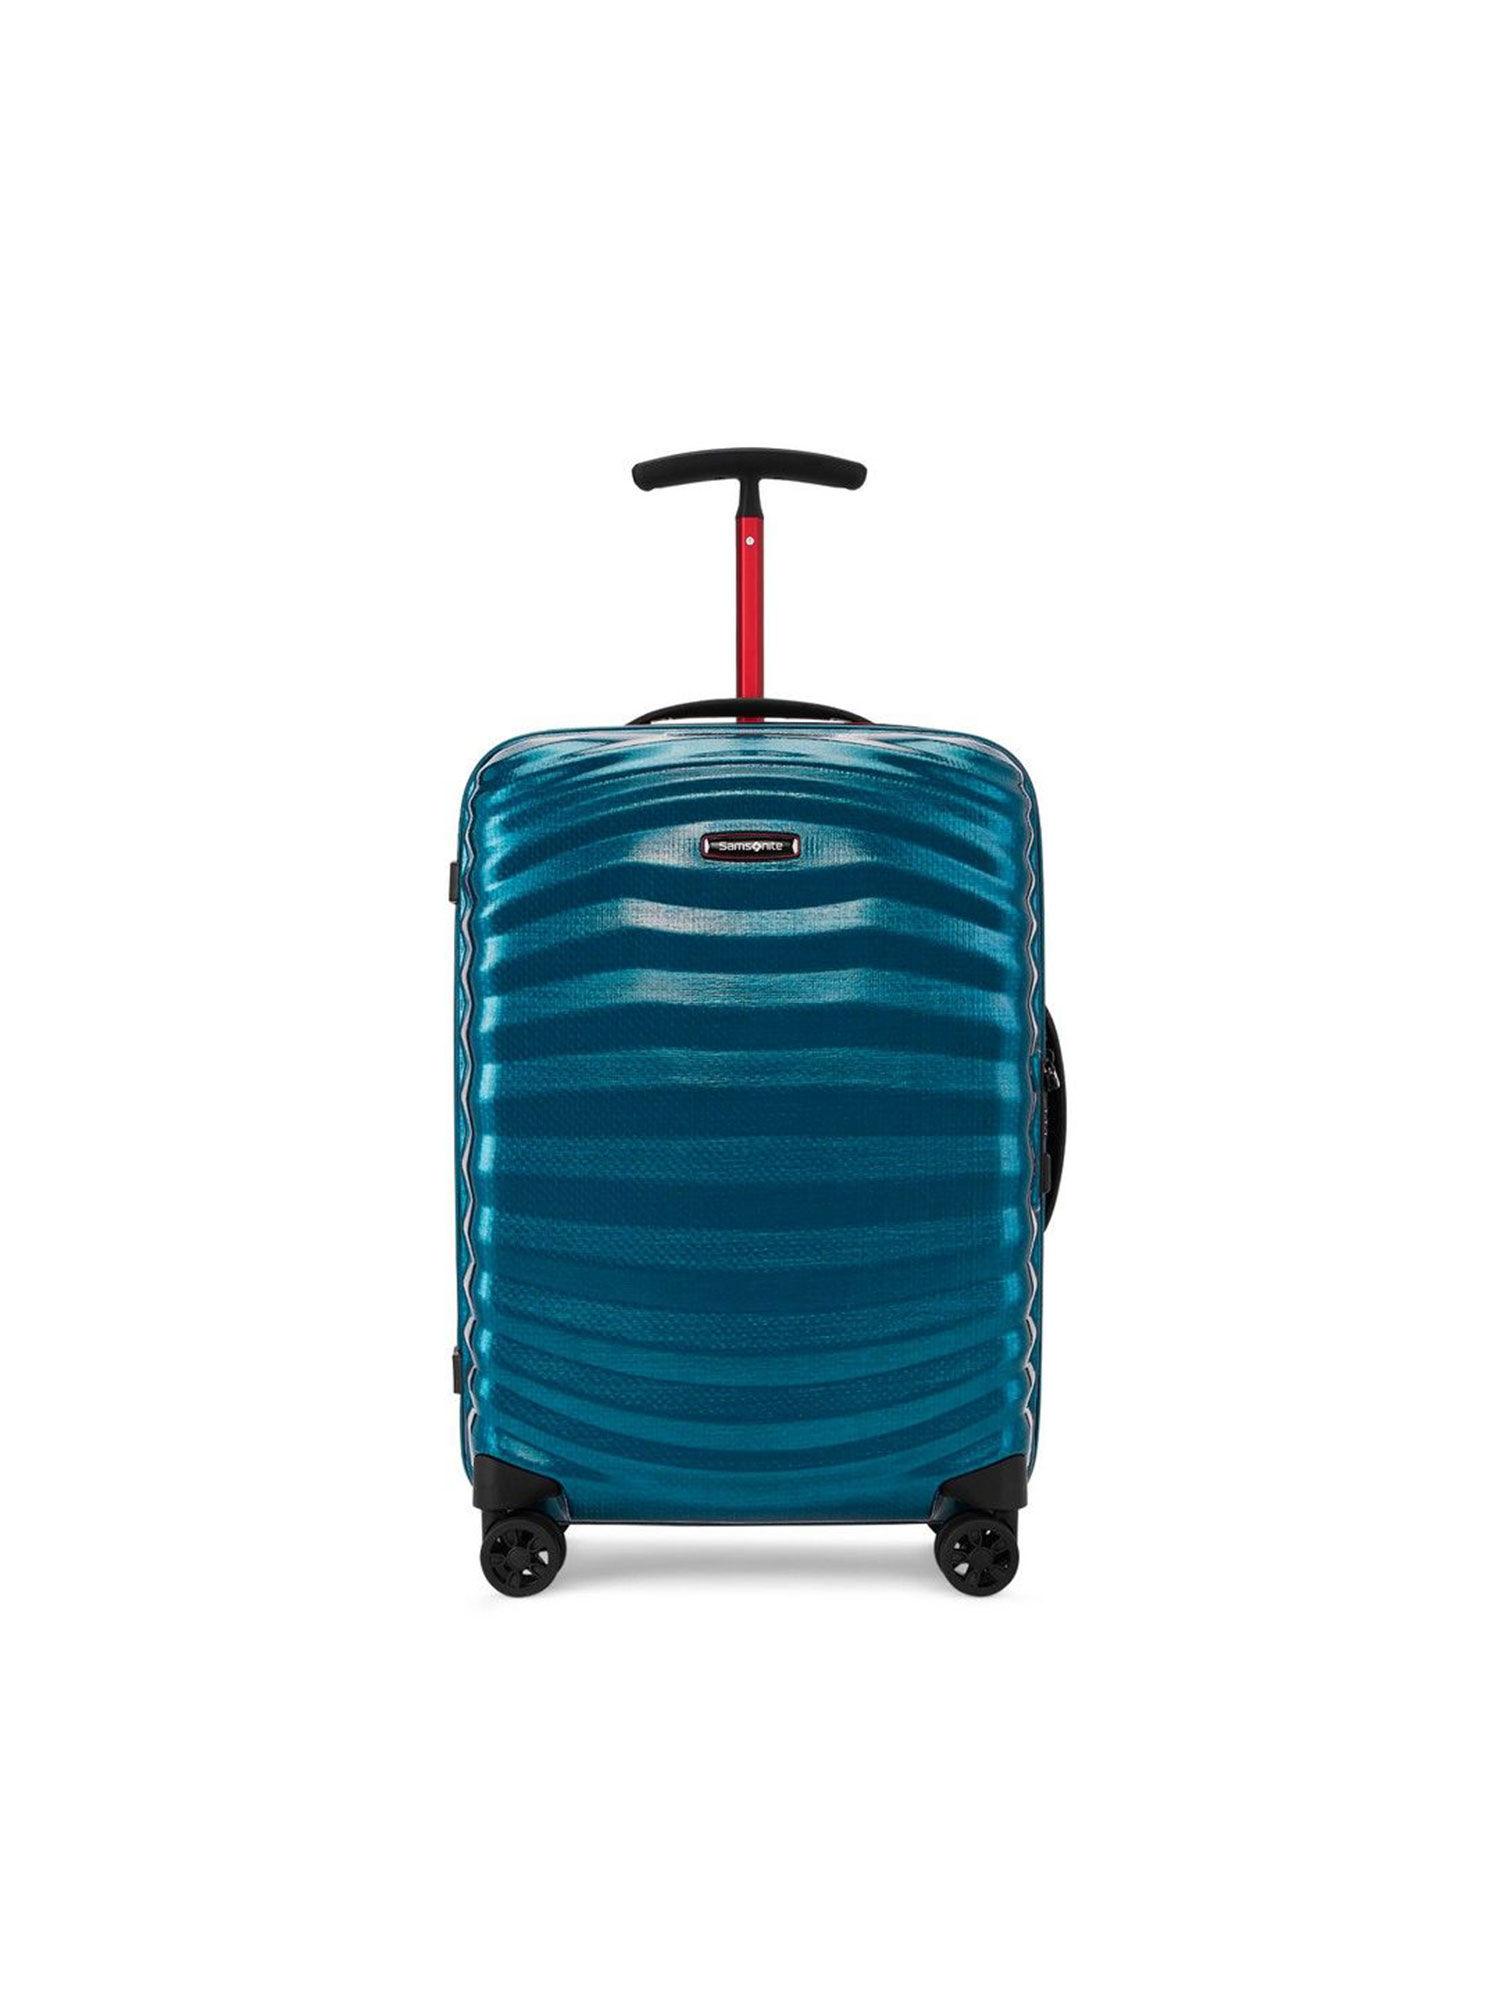 lite-shock d sport spinner hard sided petrol blue luggage bag